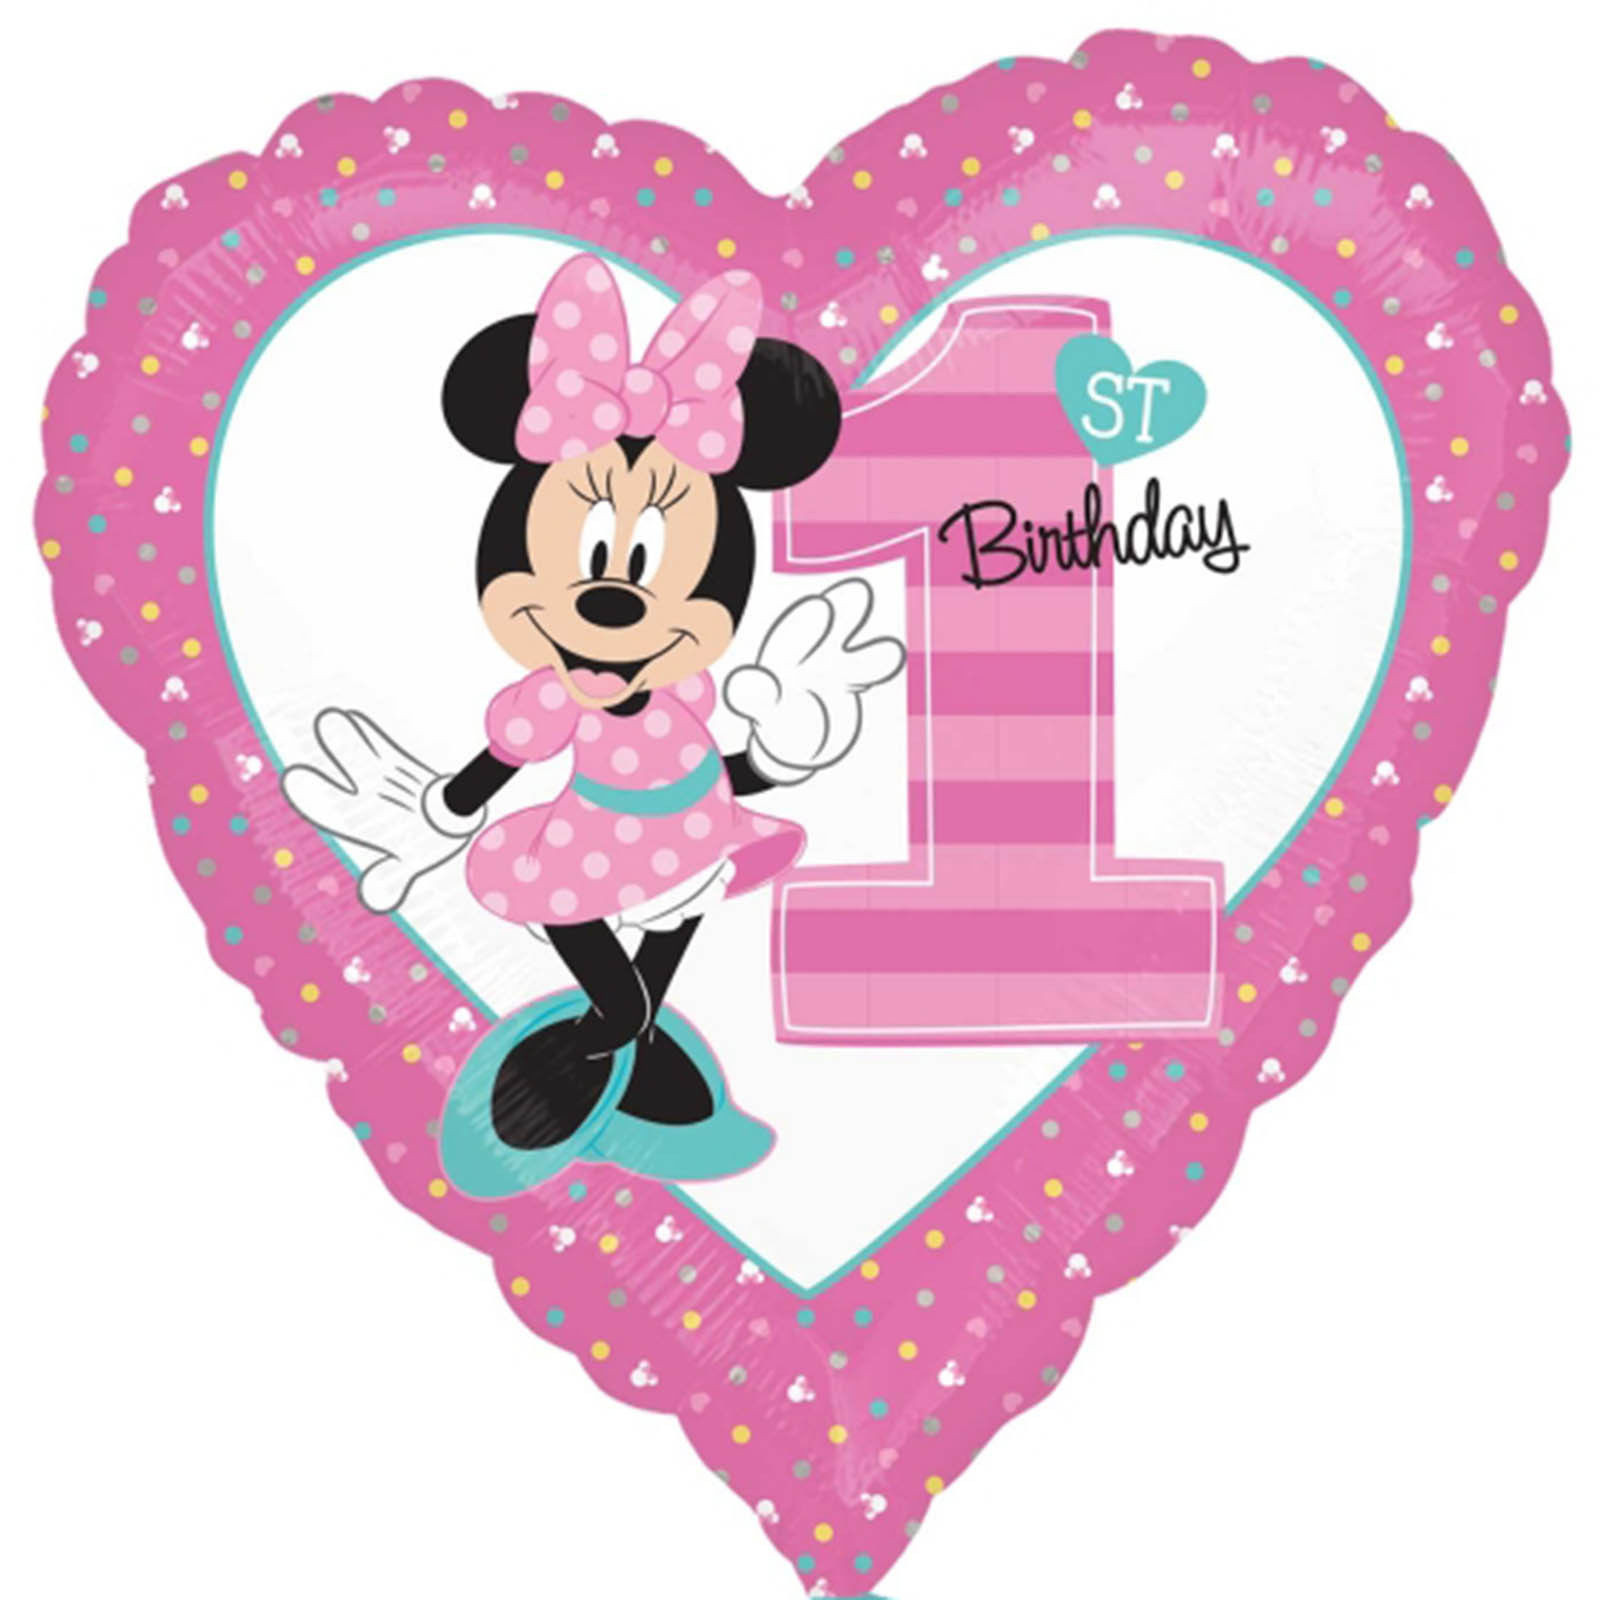 Minnie Mouse 1st Birthday Party
 NEW Baby Minnie Mouse 1ST Birthday Balloon Bouquet Party